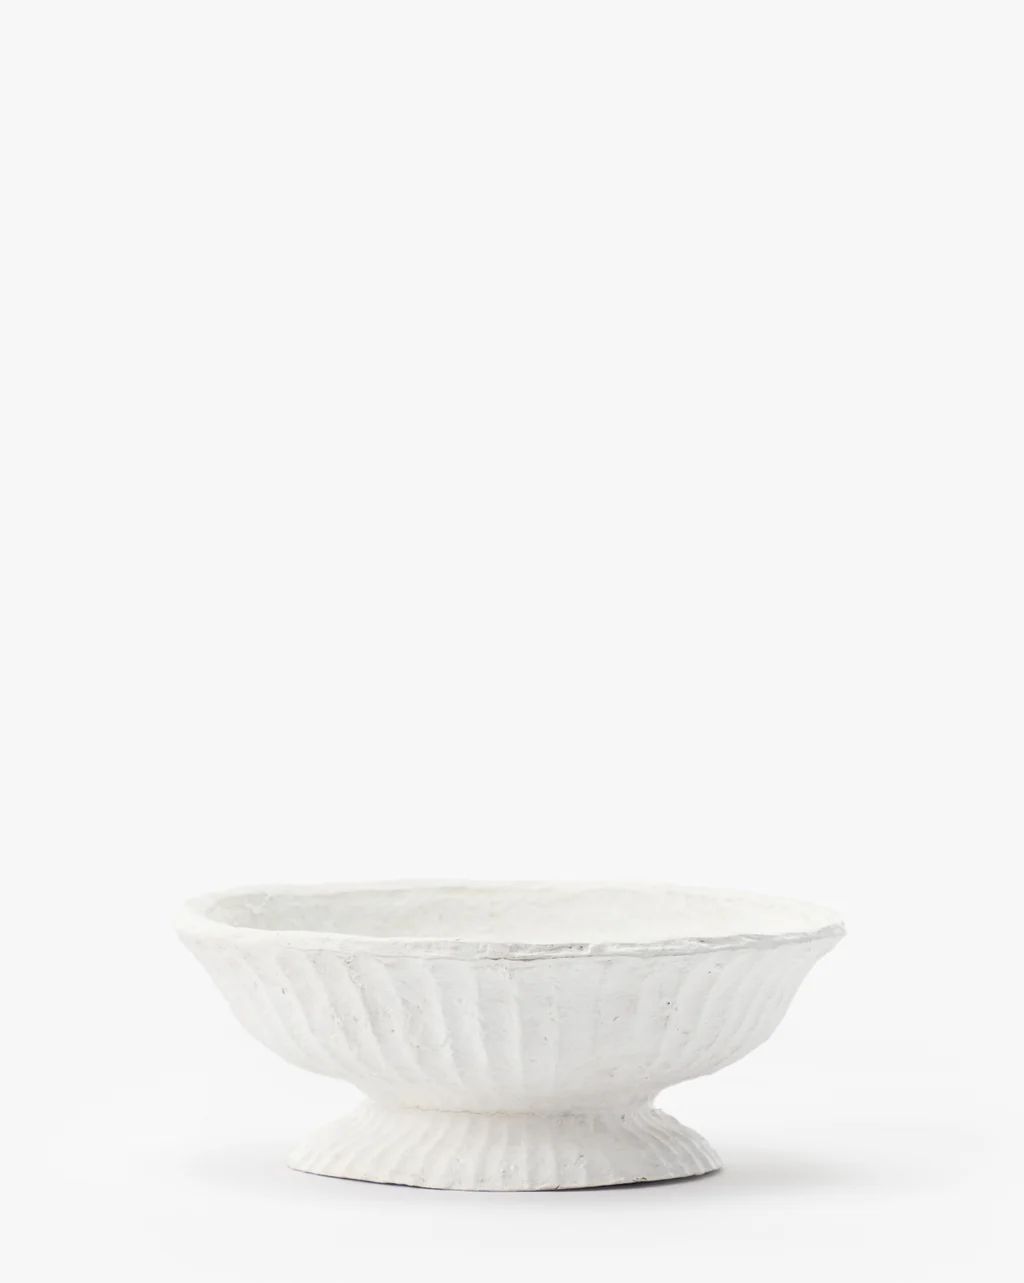 Arrieta Paper Mache Bowl | McGee & Co. (US)